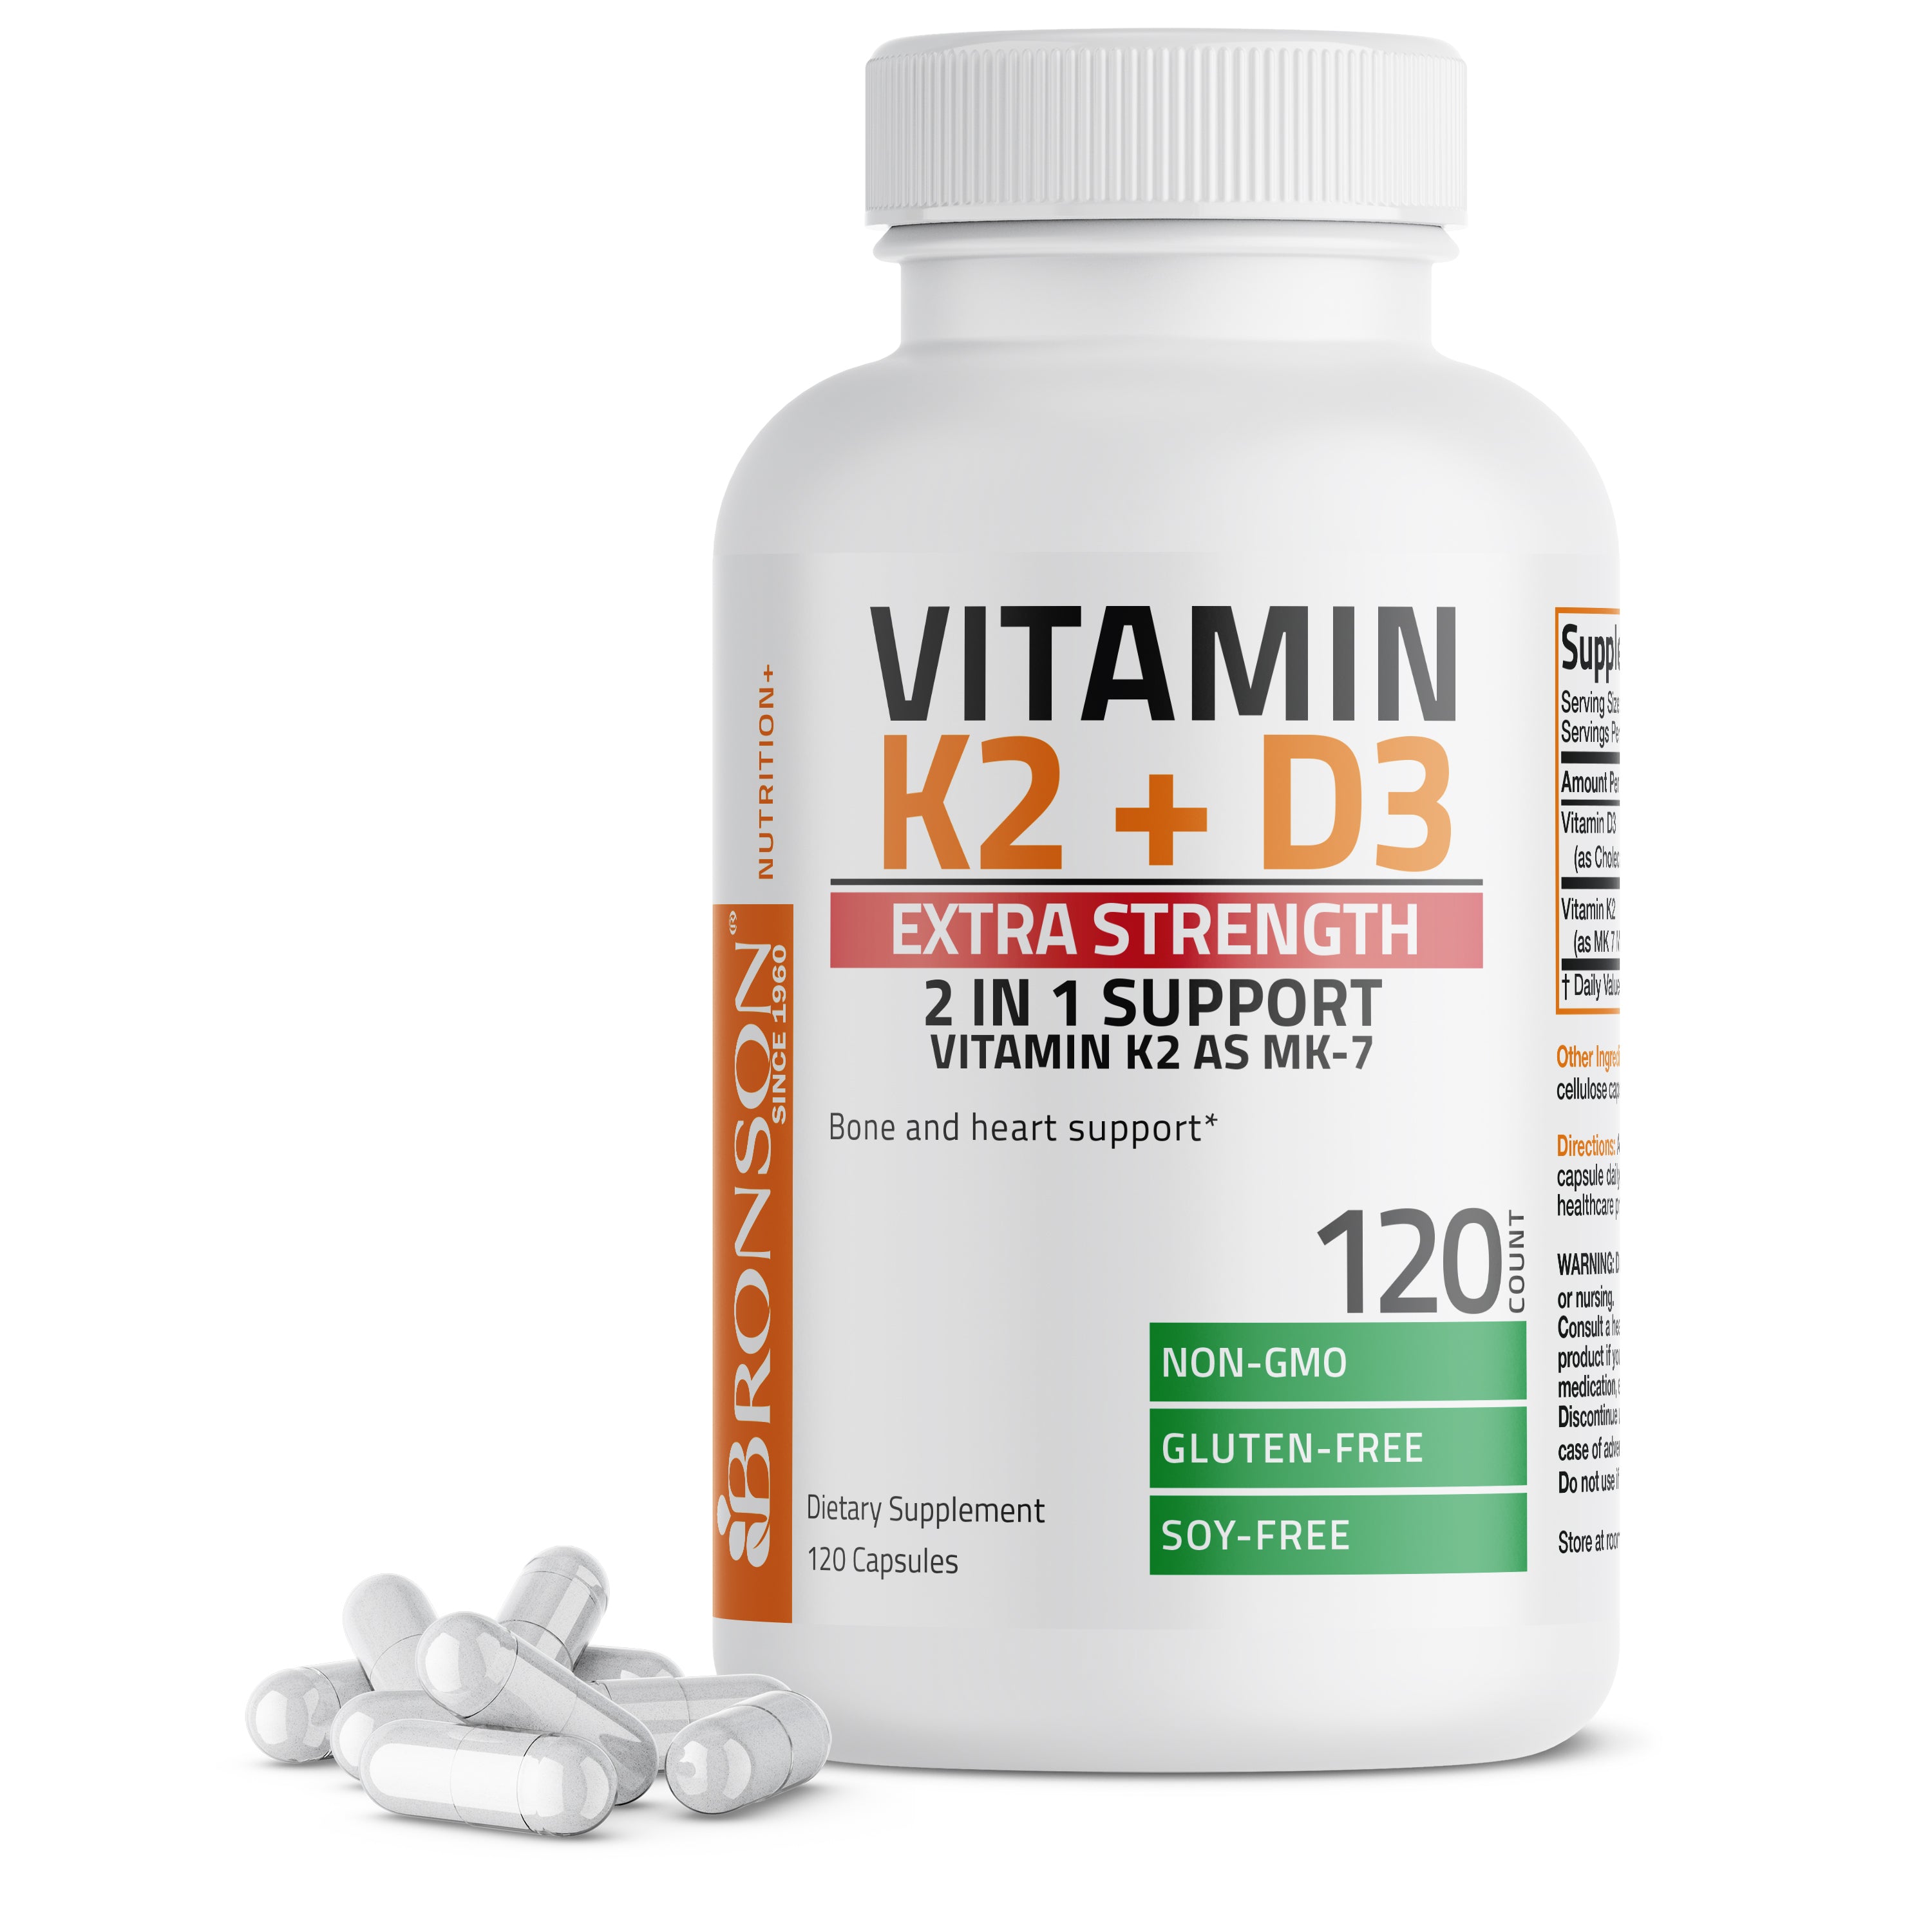 Vitamin K2 MK-7 Plus Vitamin D3 Extra Strength view 7 of 12